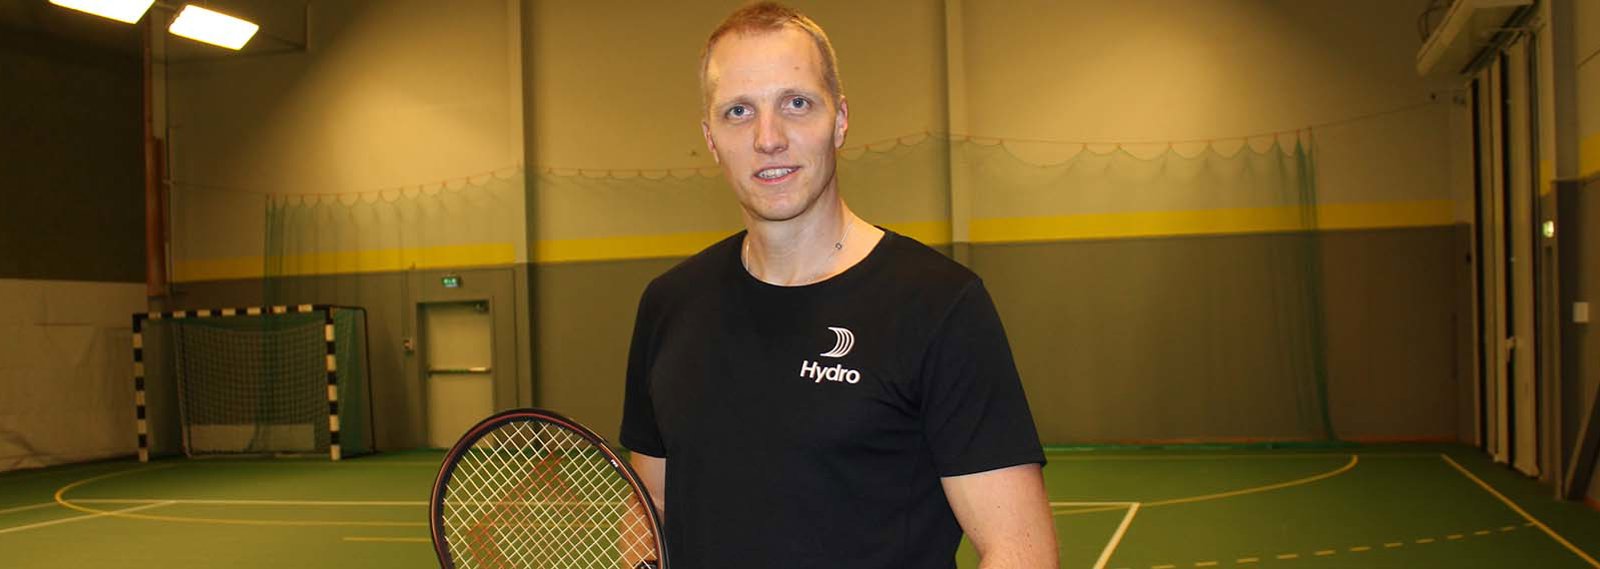 Albin Pettersson in the tennishall